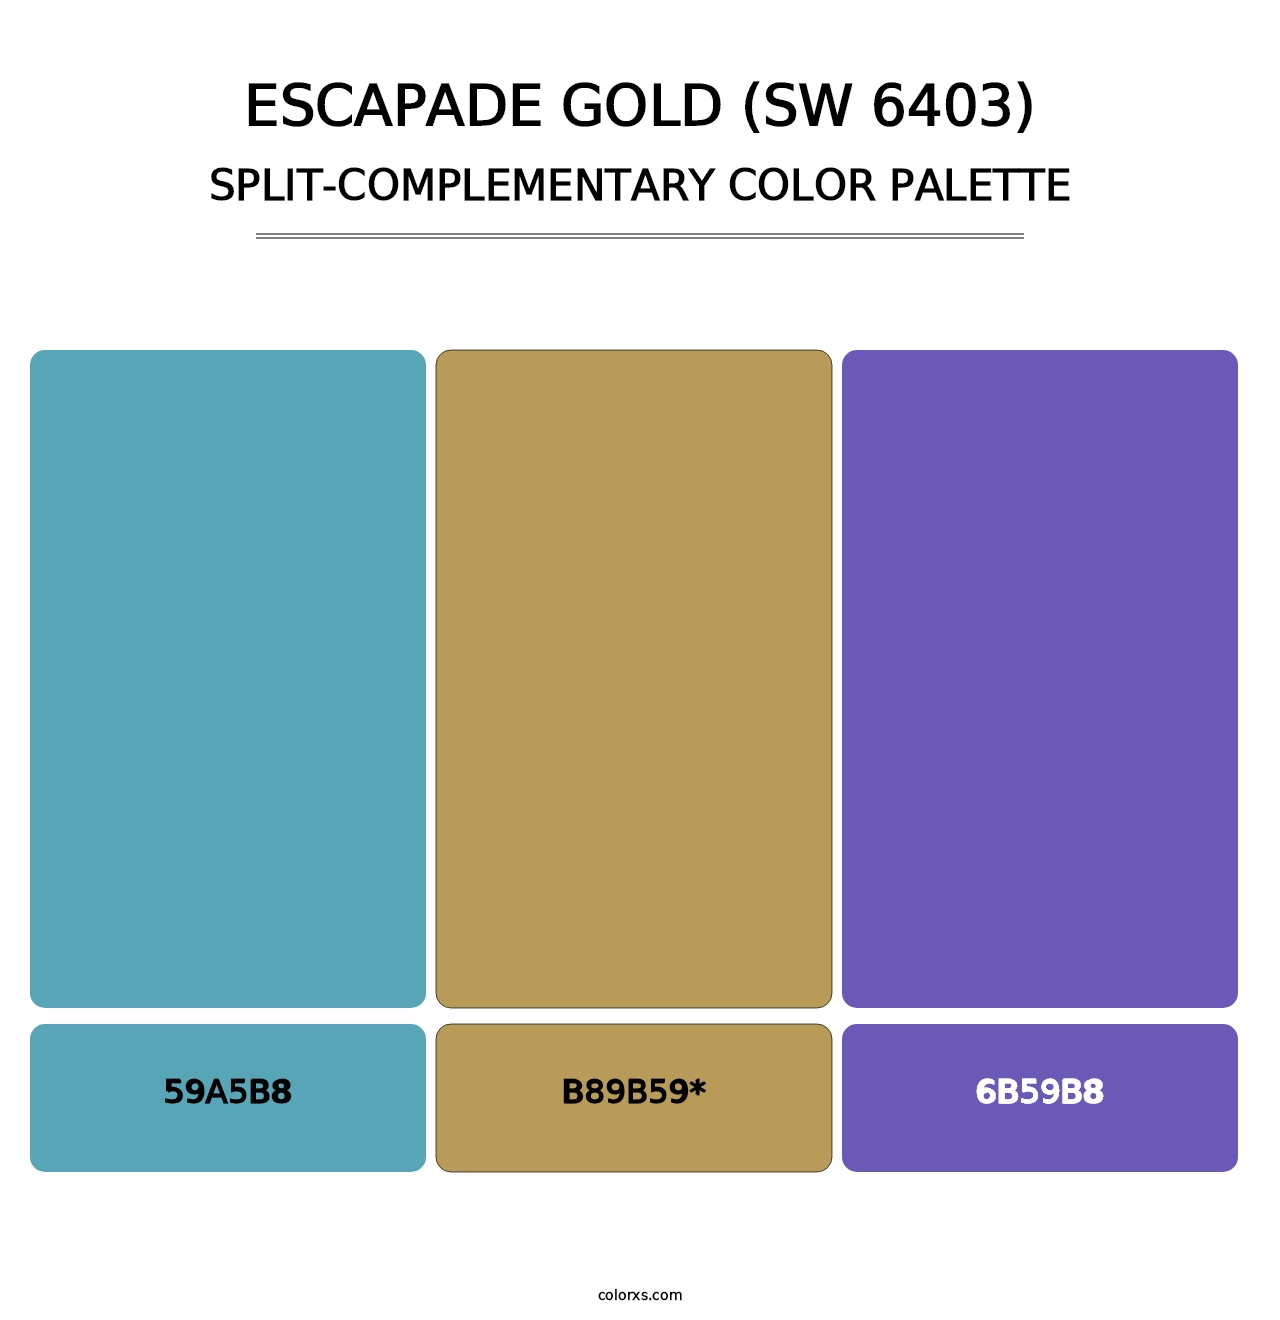 Escapade Gold (SW 6403) - Split-Complementary Color Palette